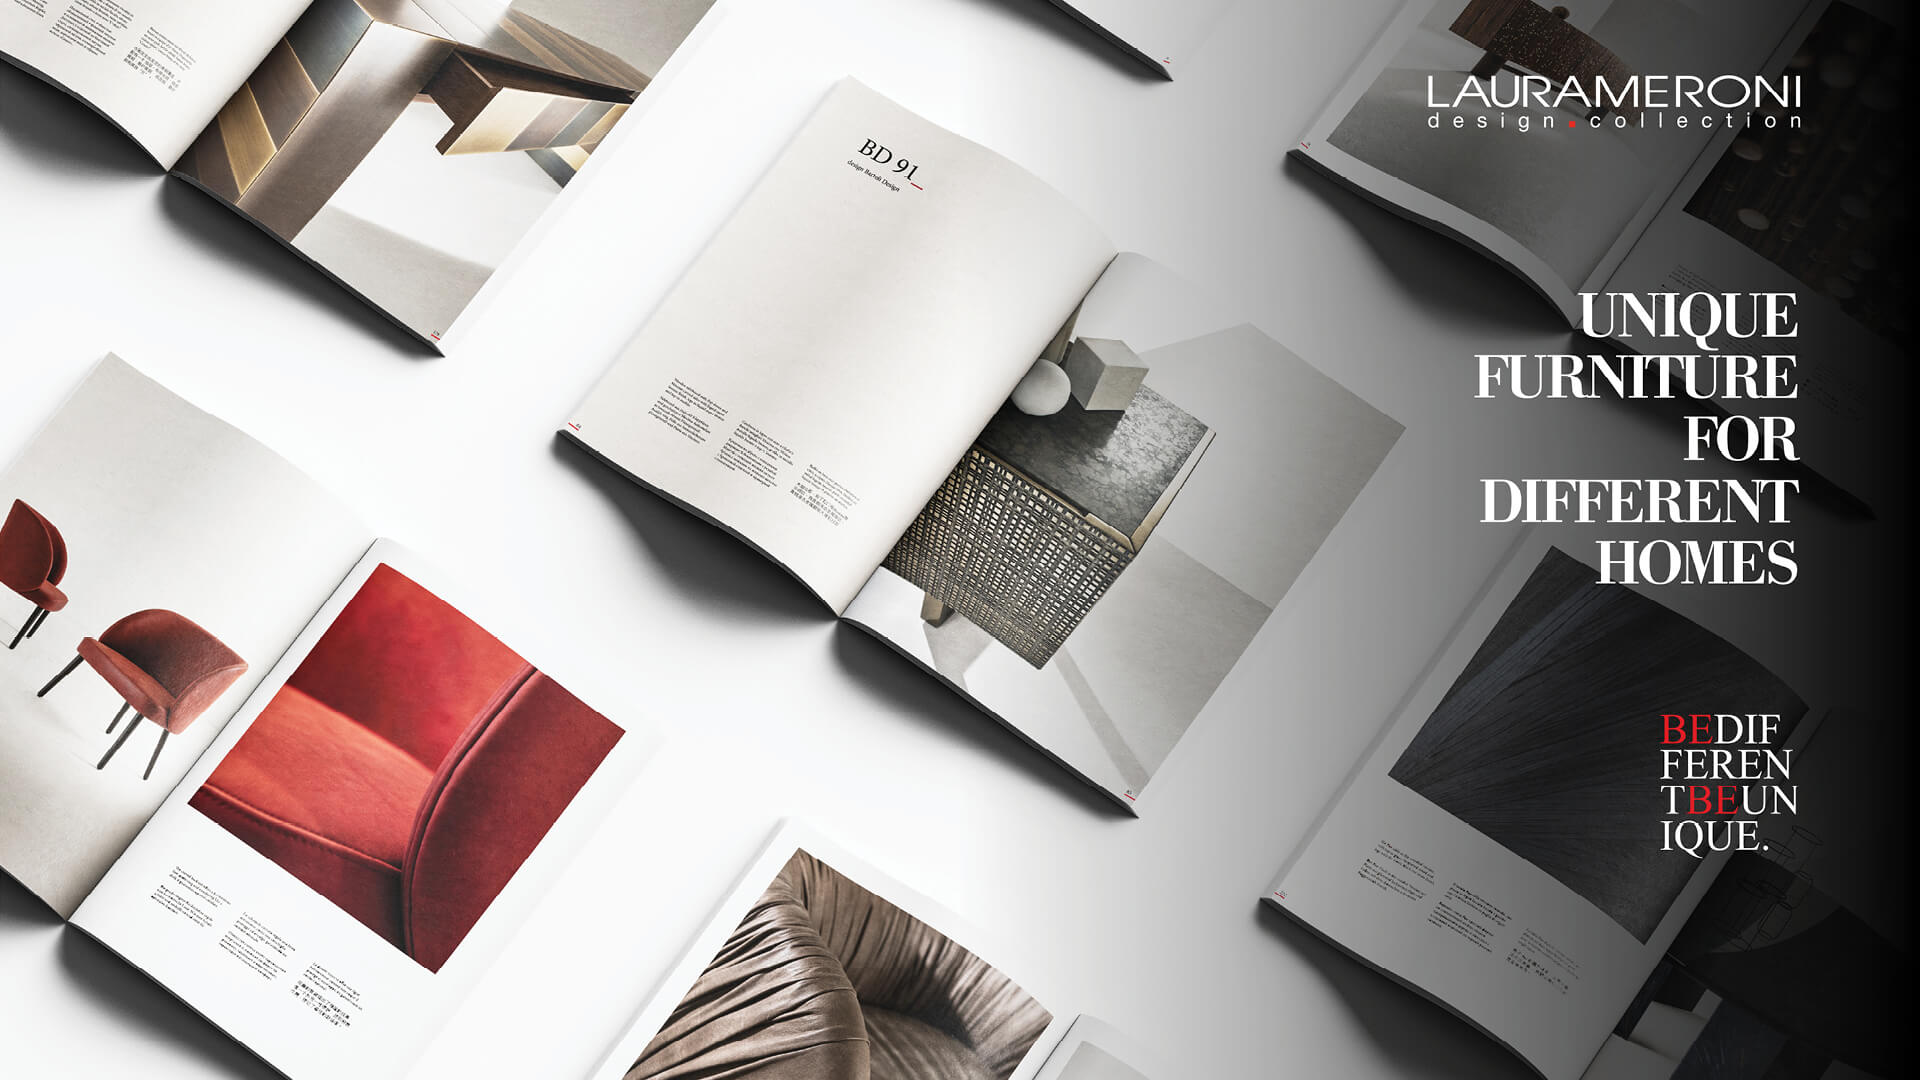 Laurameroni’s 2022 catalogues interweave design flexibility and Italian craftsmanship